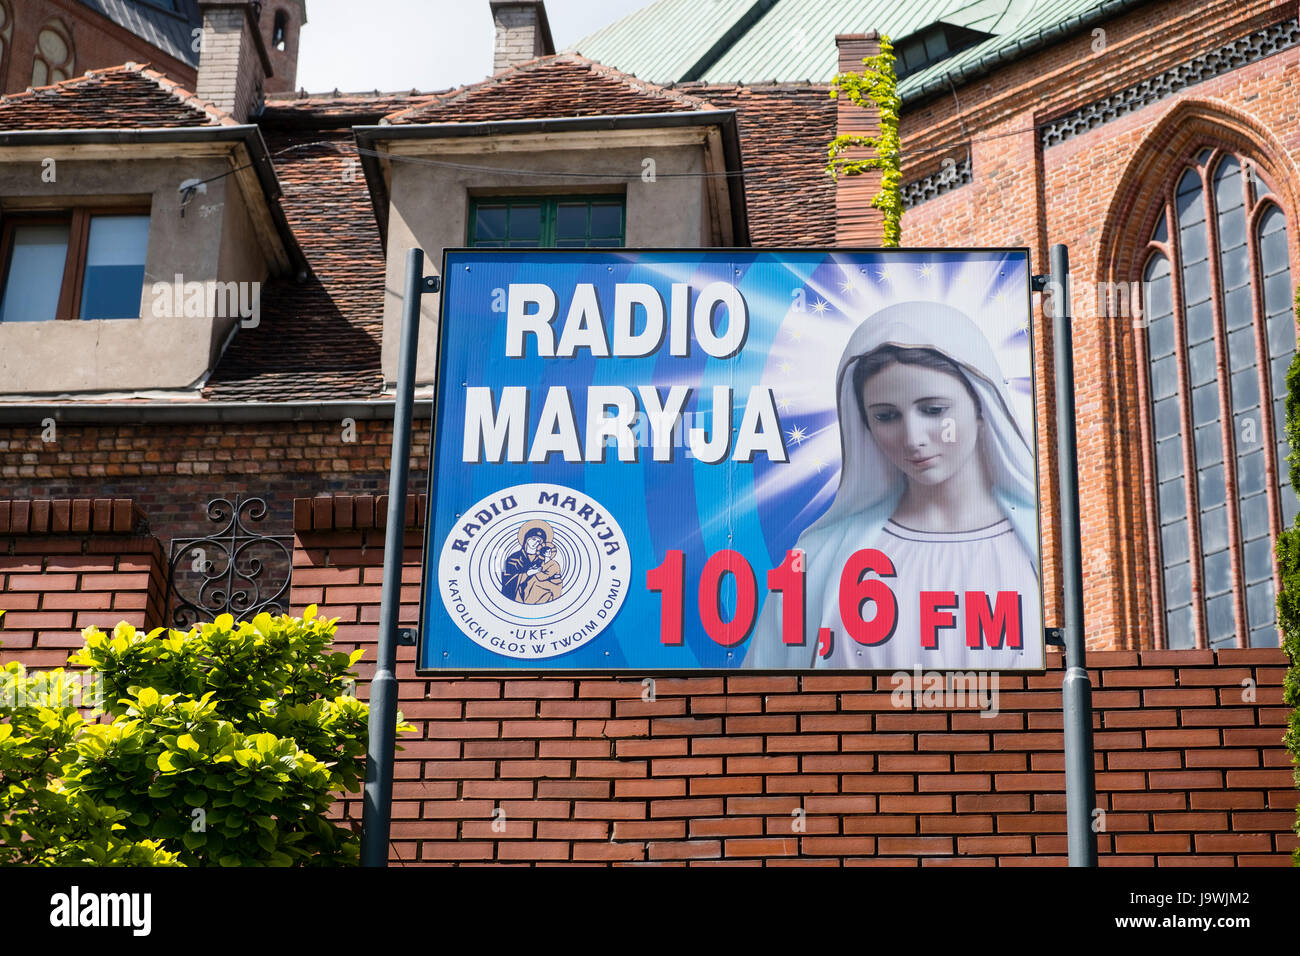 Radio maria -Fotos und -Bildmaterial in hoher Auflösung – Alamy